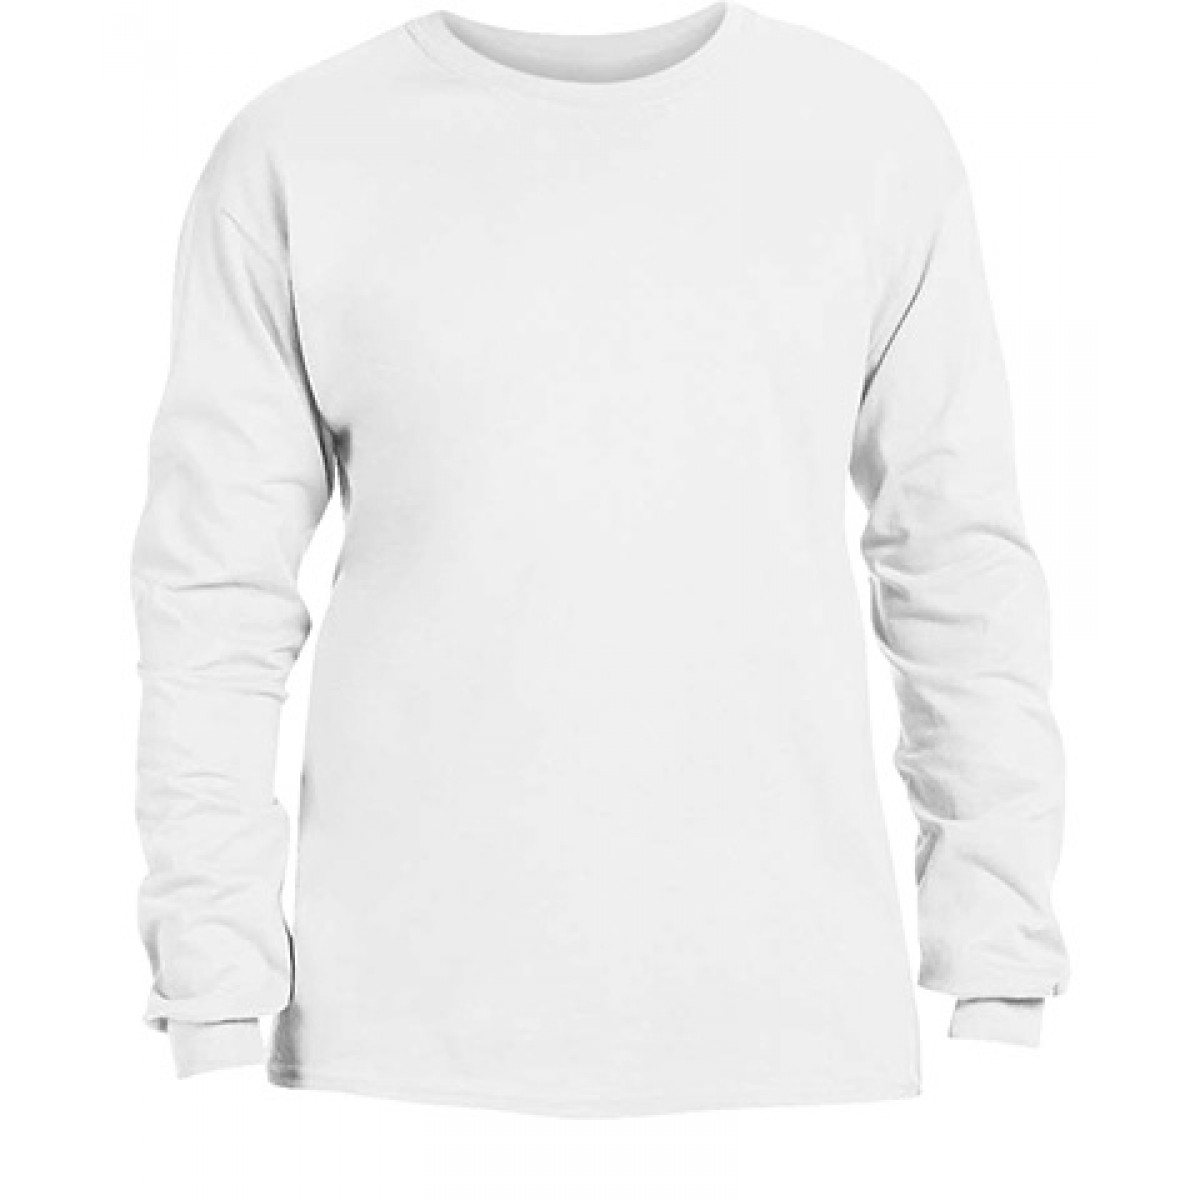 Adidas Long Sleeve T-shirt With Adidas logo-White-L